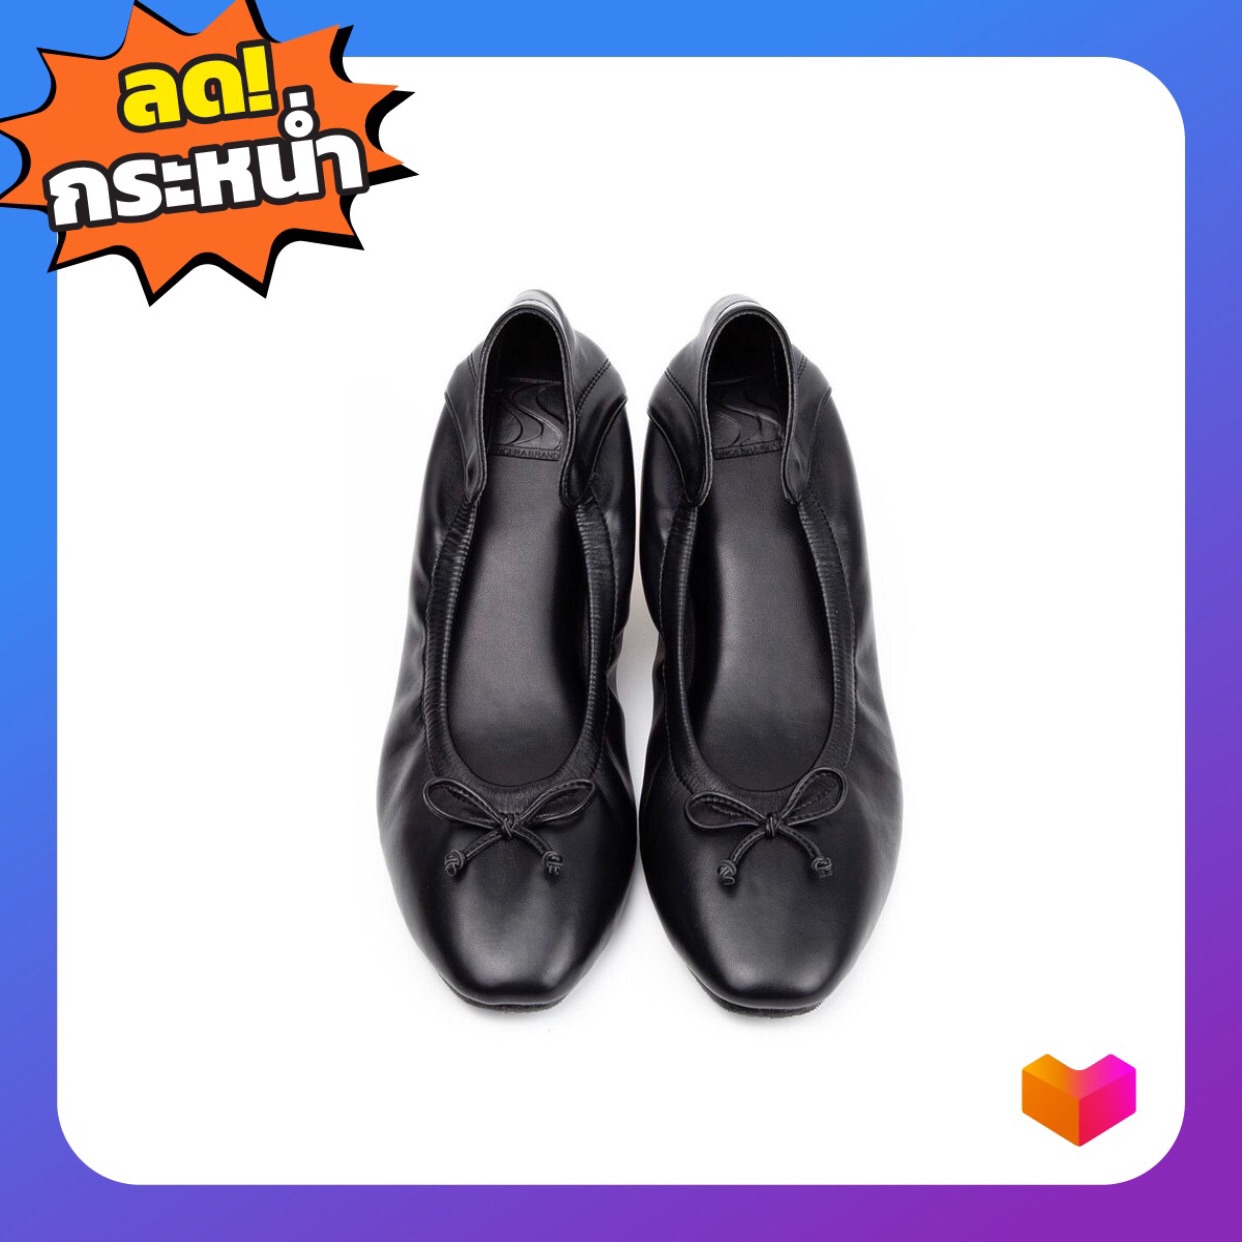 Sincera Brand (Premium Flat shoes) คัชชูสีดำ Black รองเท้าคัชชูส้นแบน คัชชูส้นเตี้ย หนังนิ่ม ใส่สบาย ไม่กัดเท้า